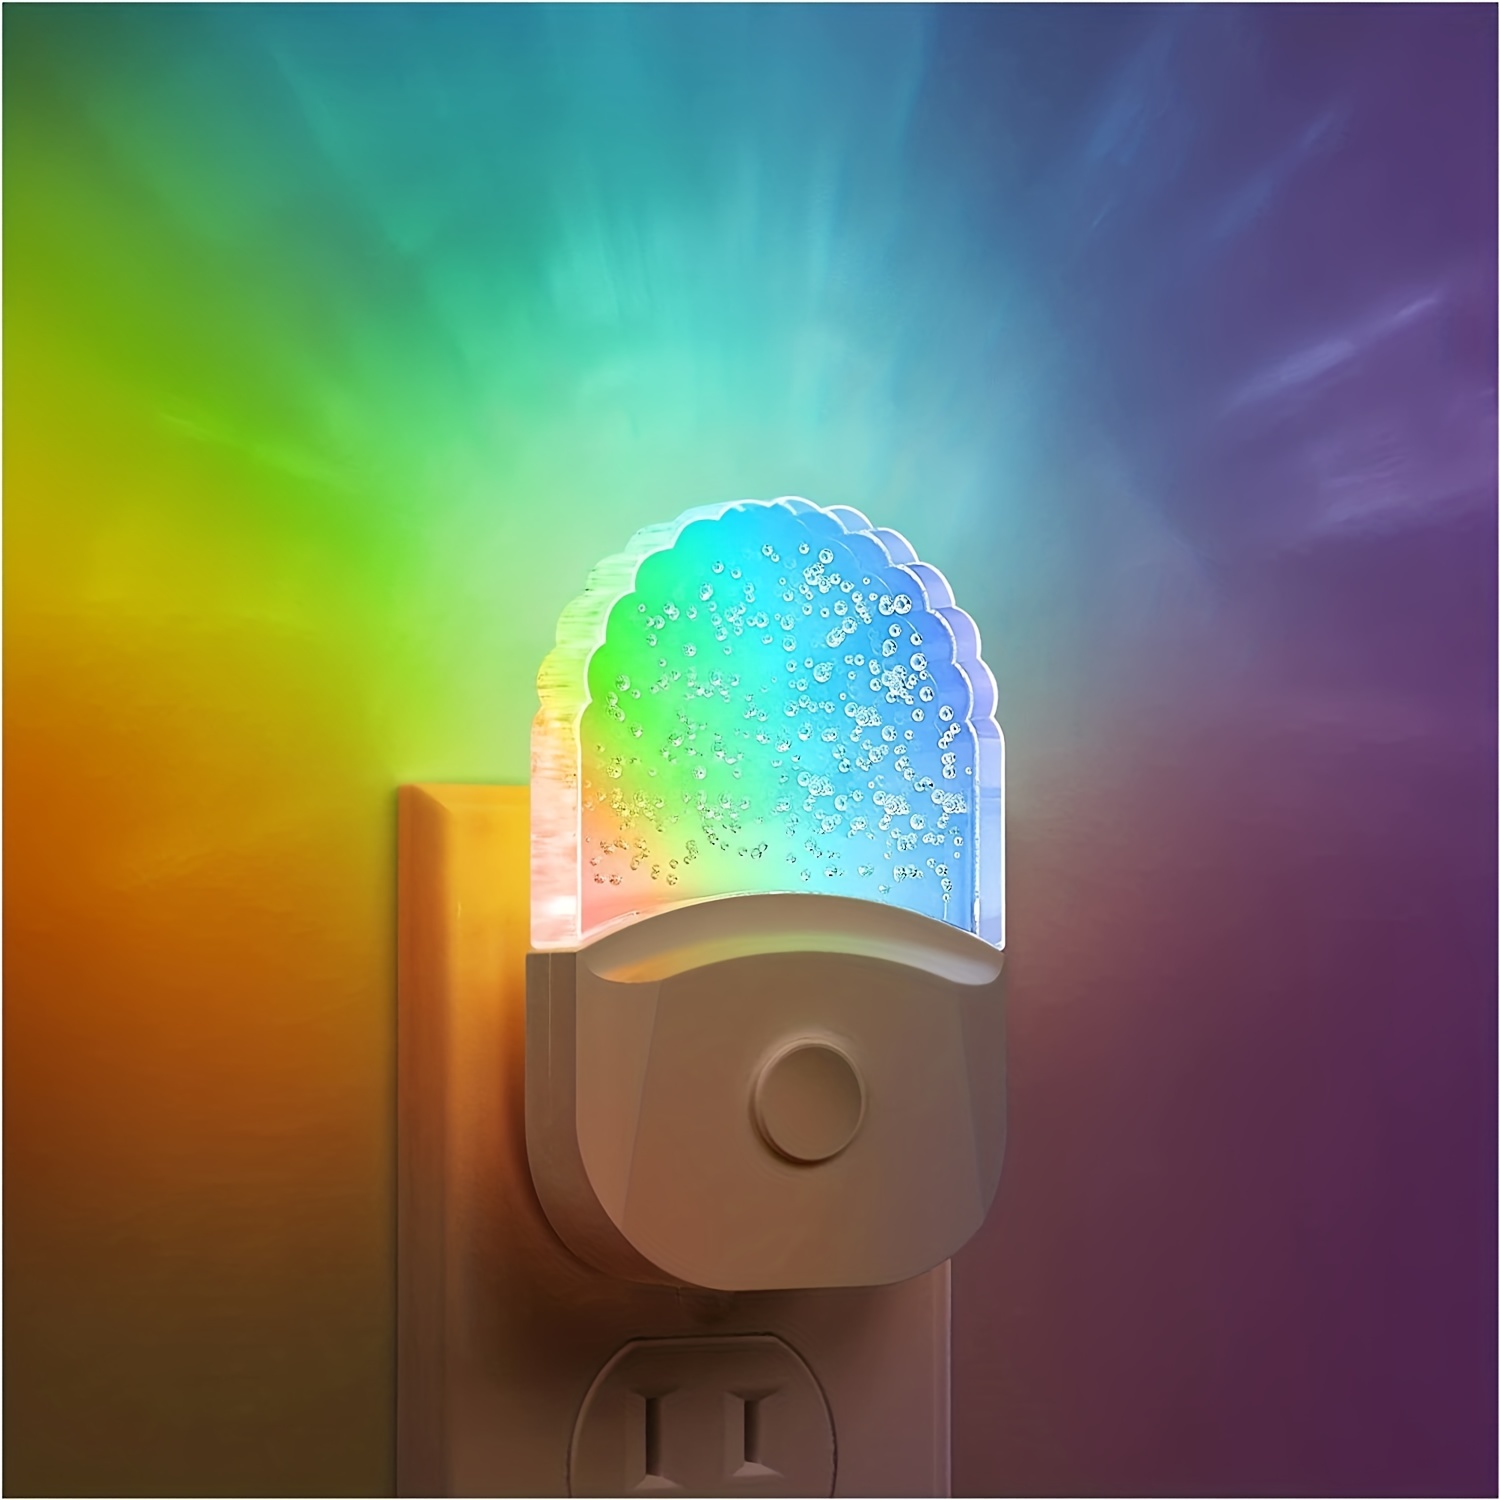 8 Color Changing LED Nightlights with Motion Detection Sensor for